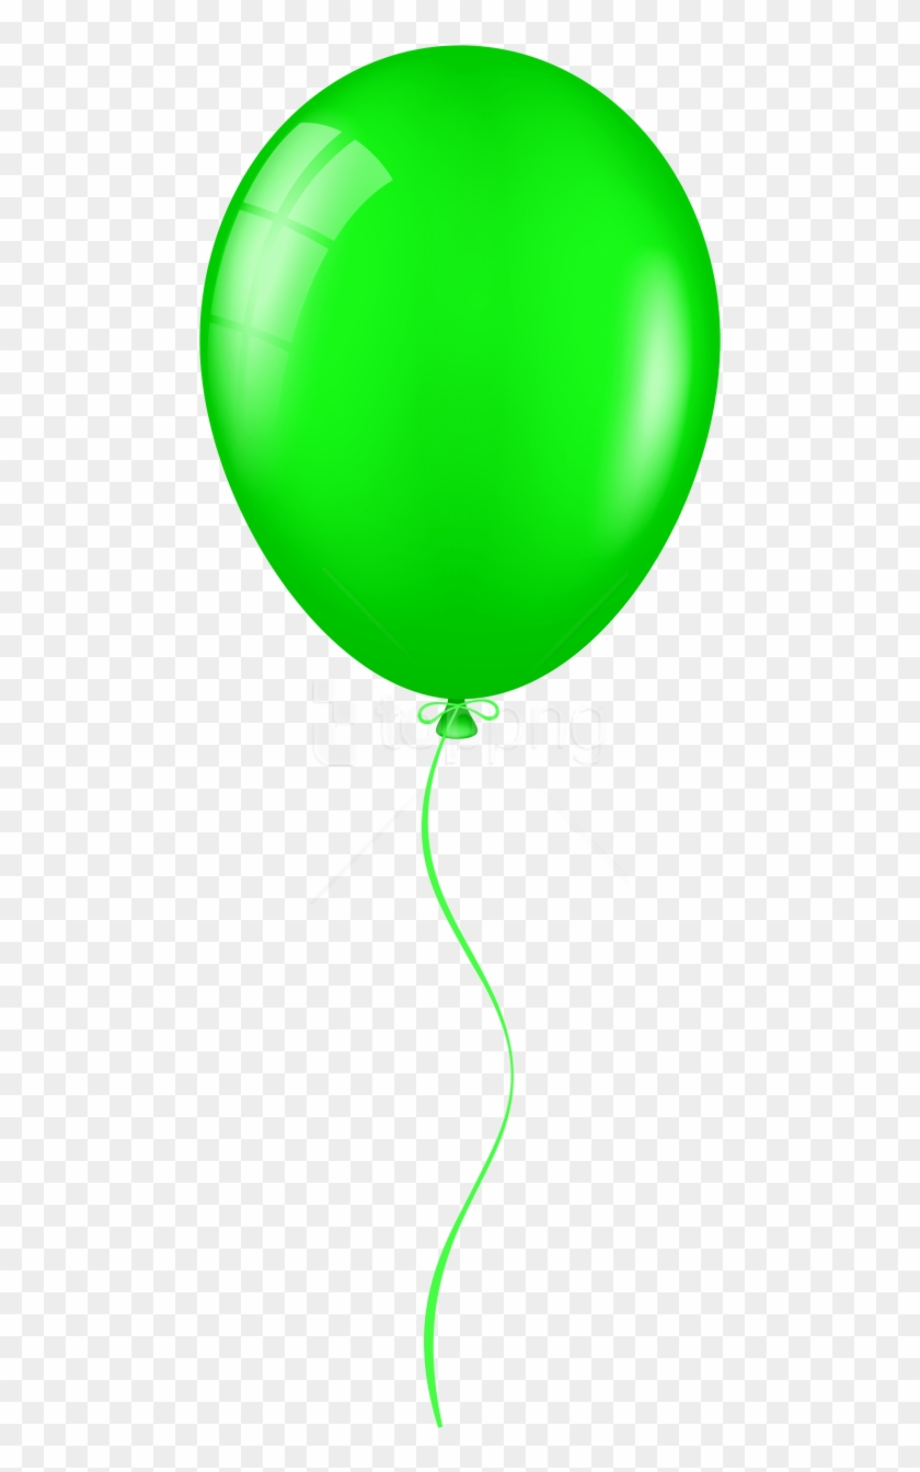 balloons clipart green